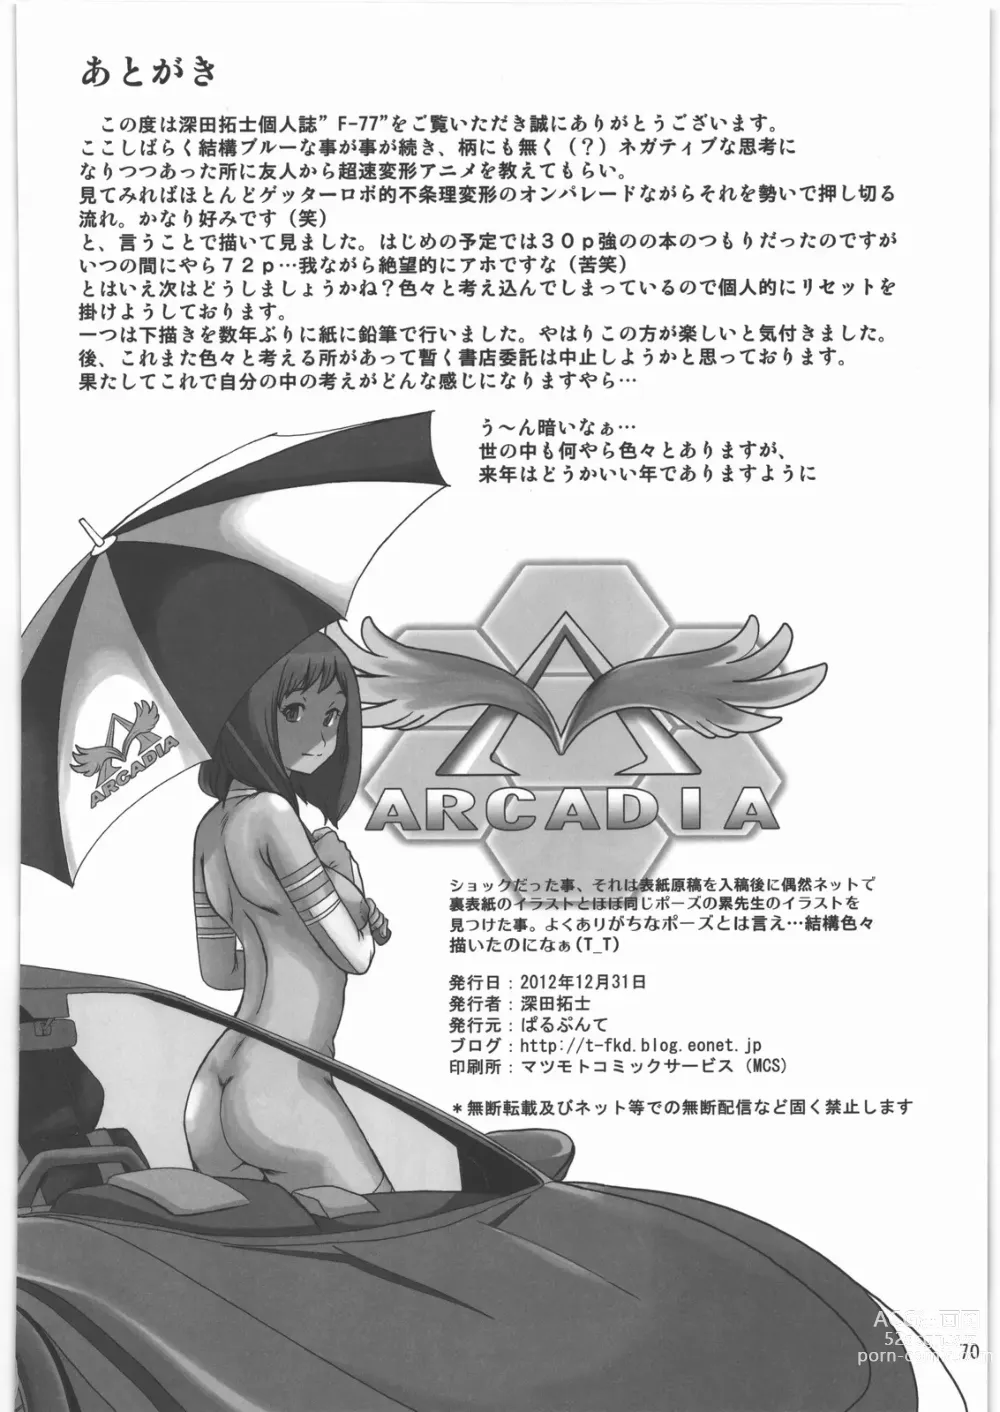 Page 69 of doujinshi F-77